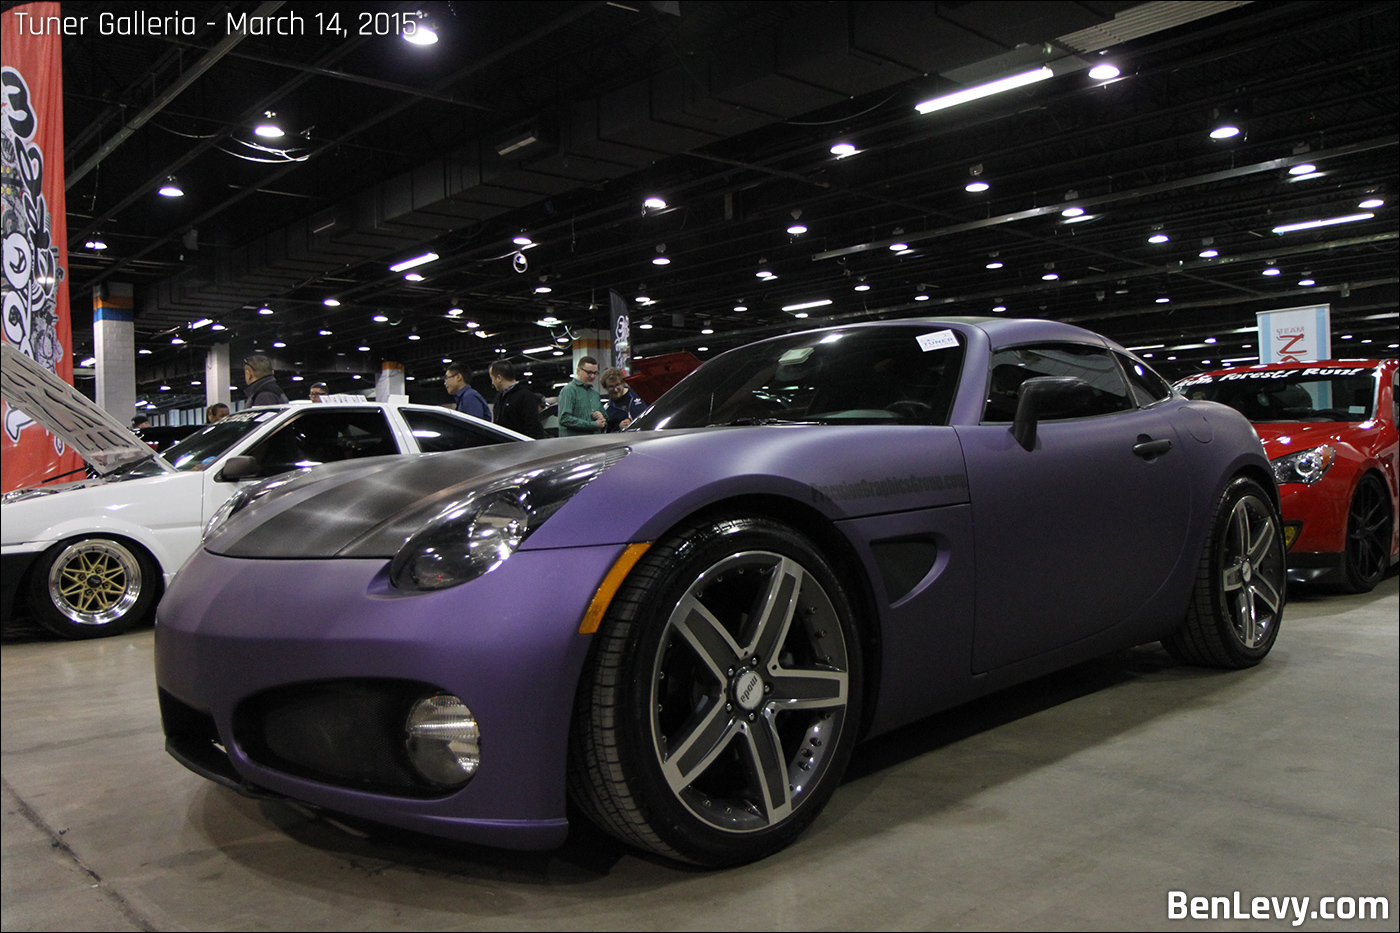 Purple Pontiac Solstice coupe